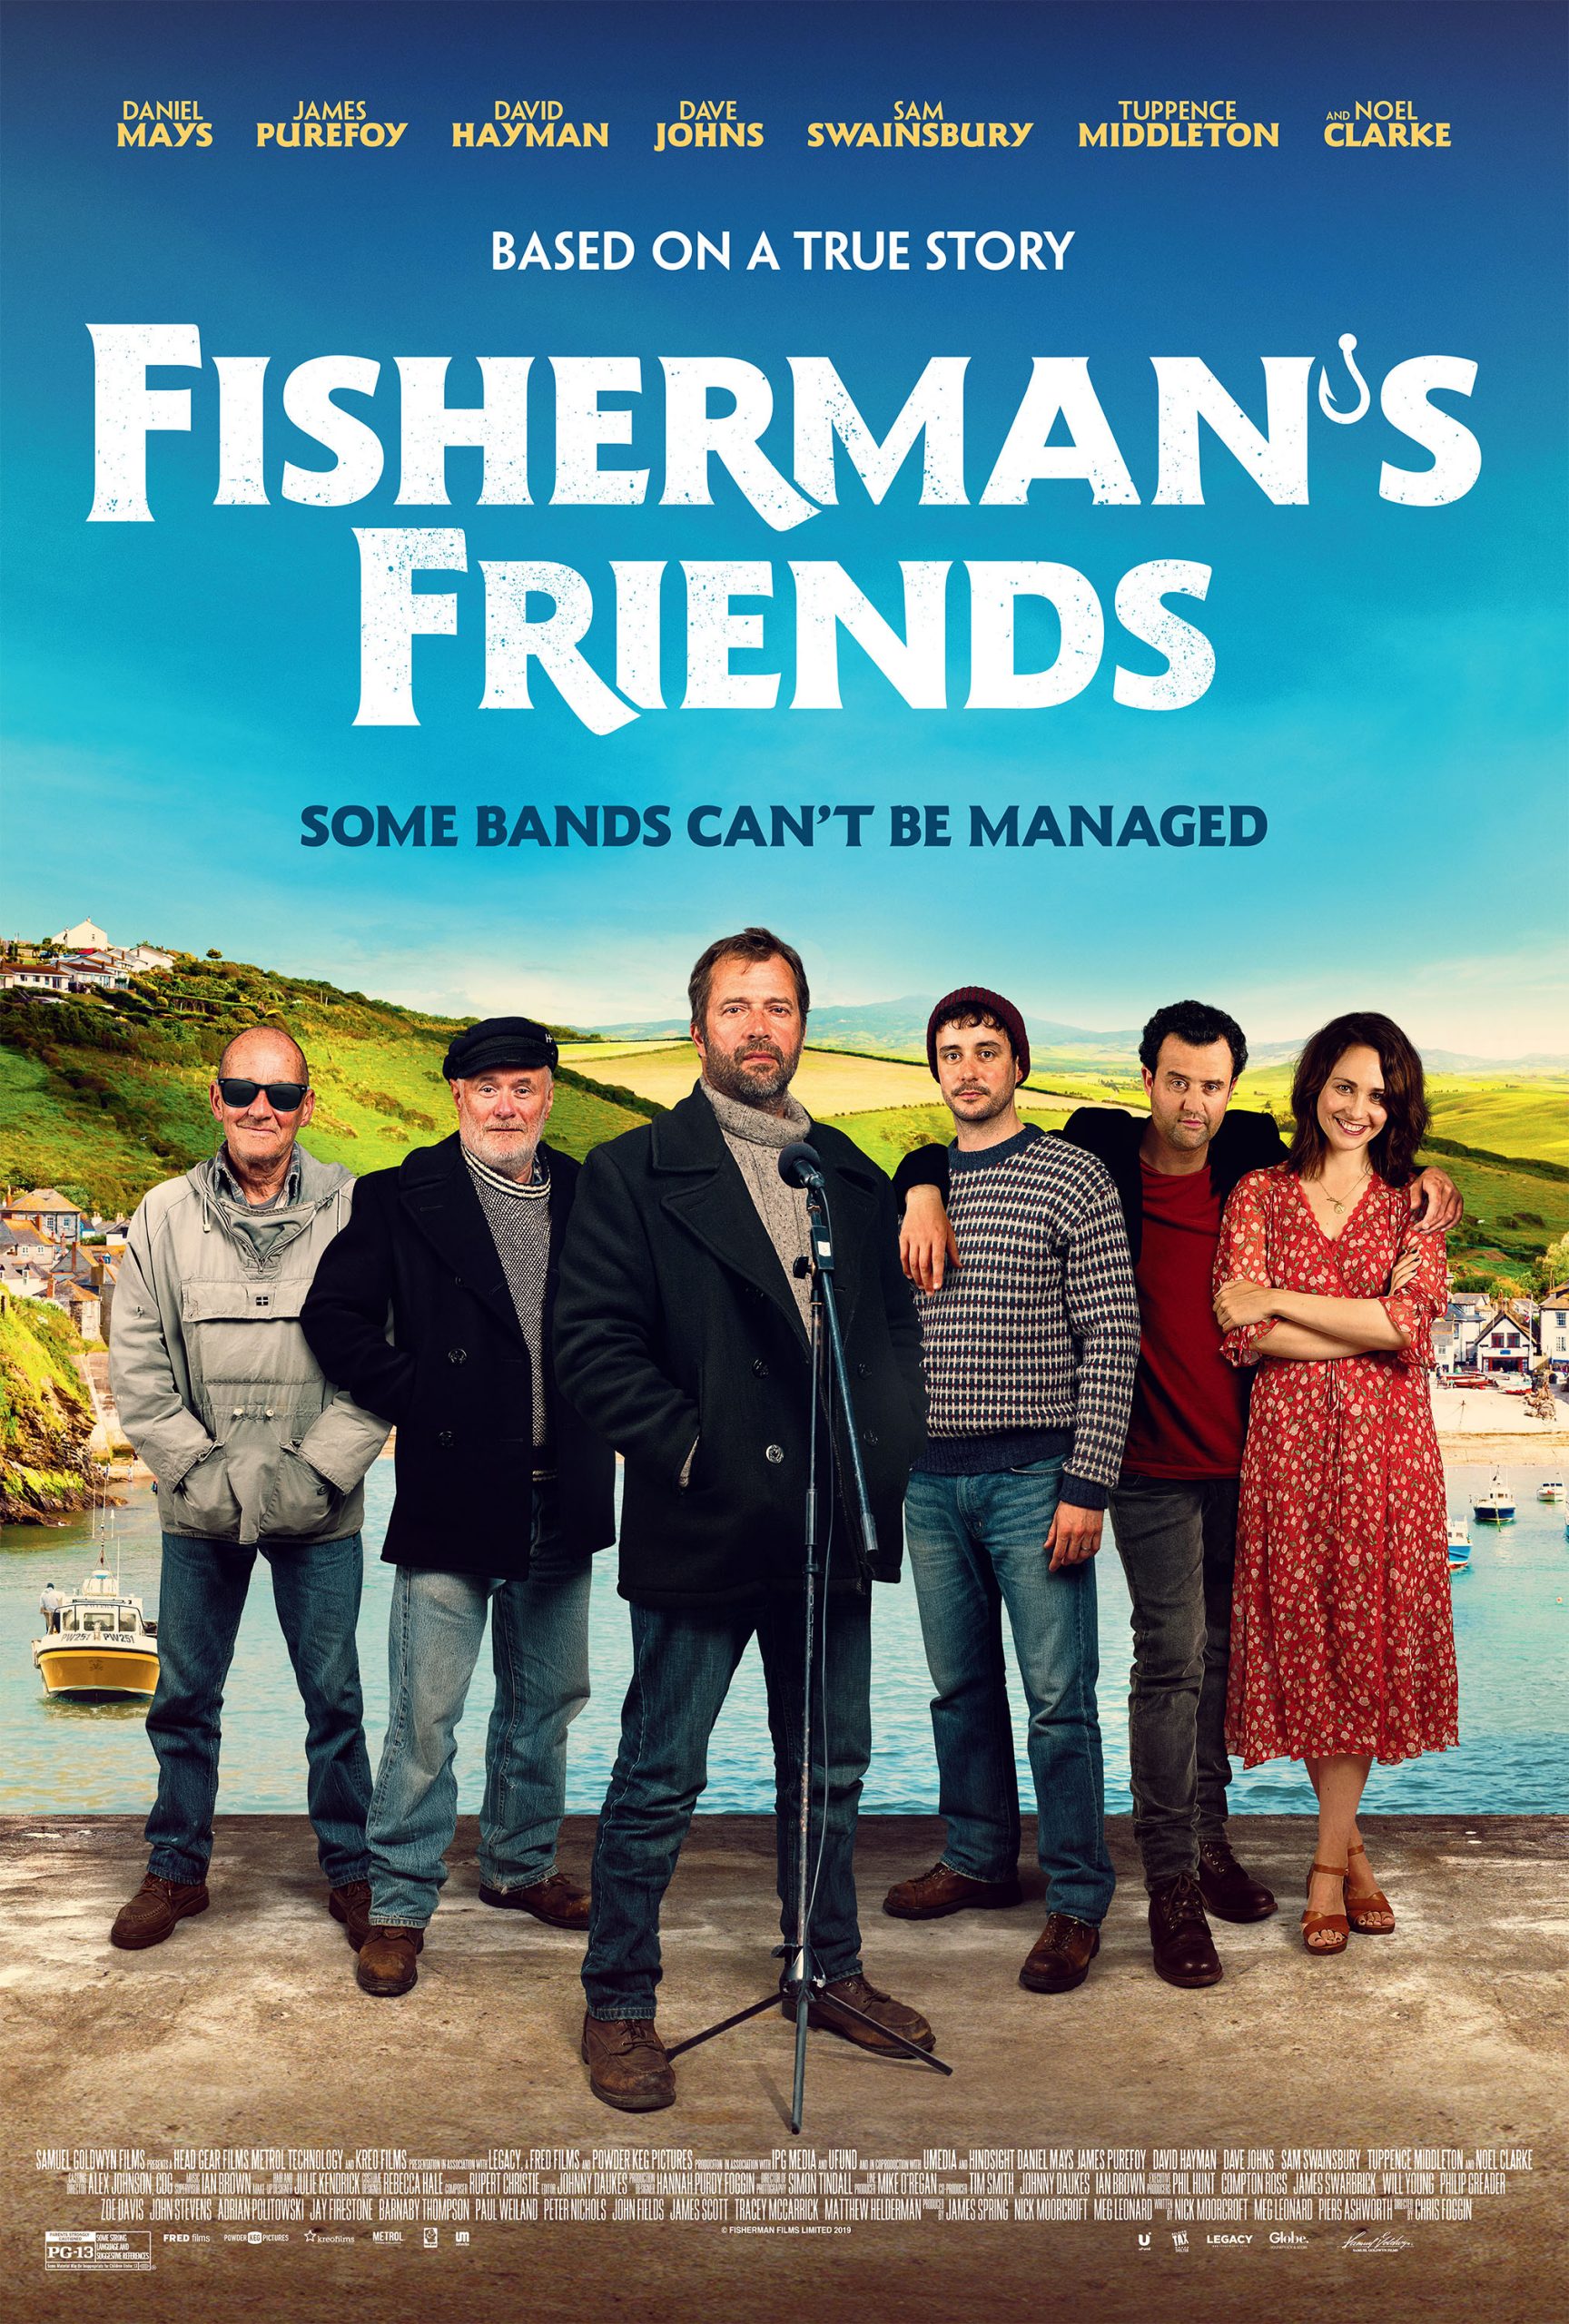 Fisherman's Friends movie Poster